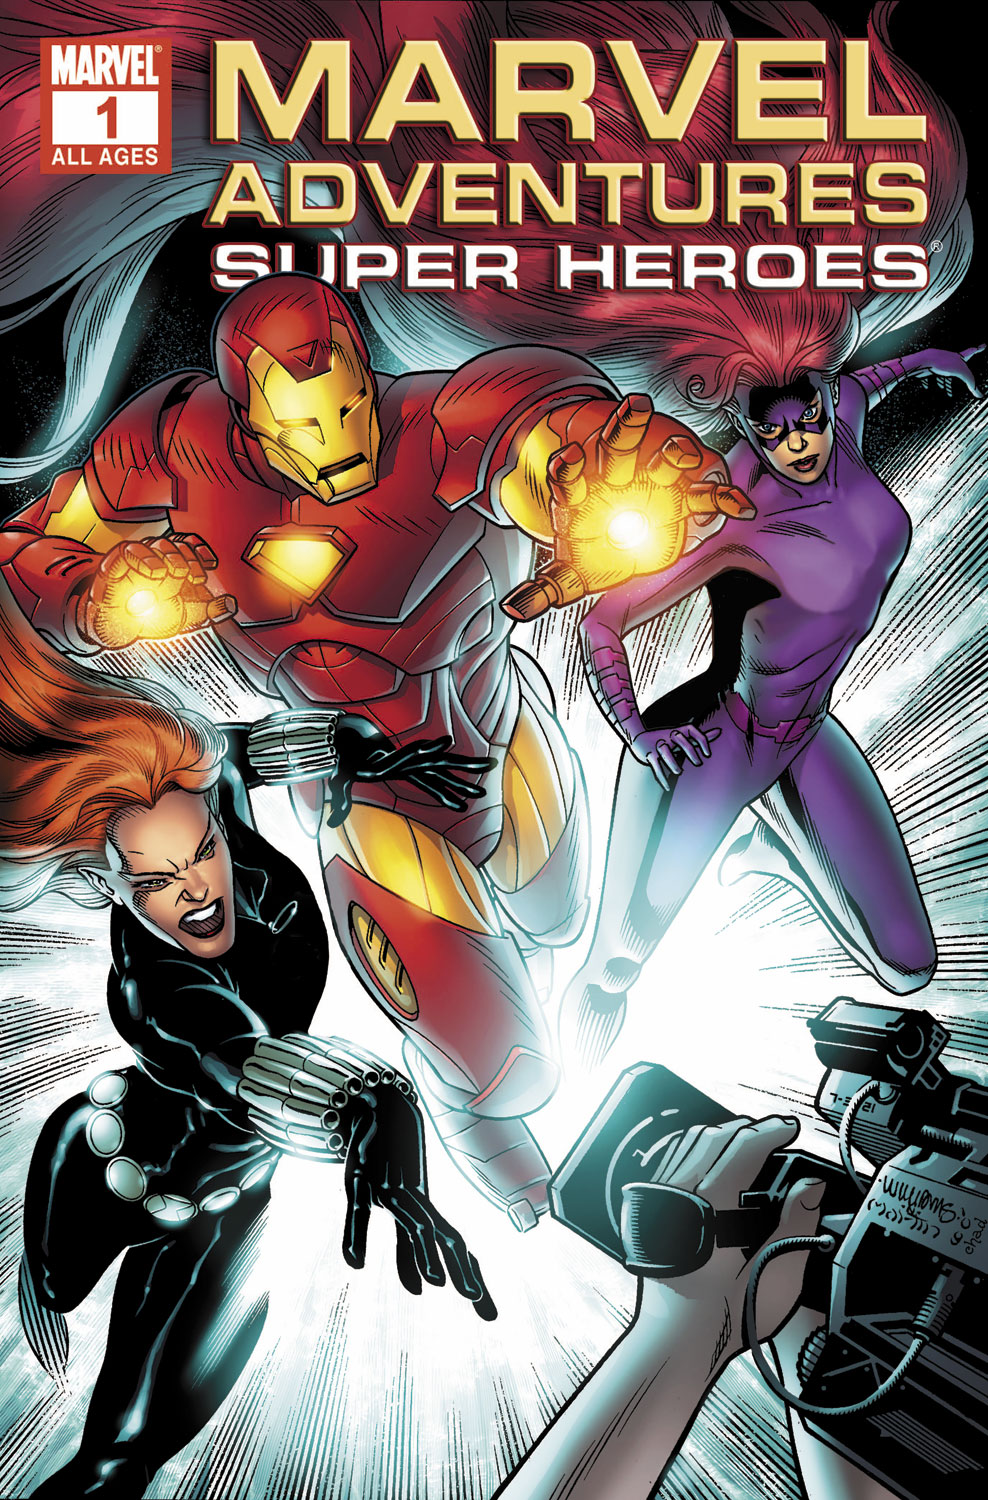 Marvel Adventures Super Heroes (2010) #1